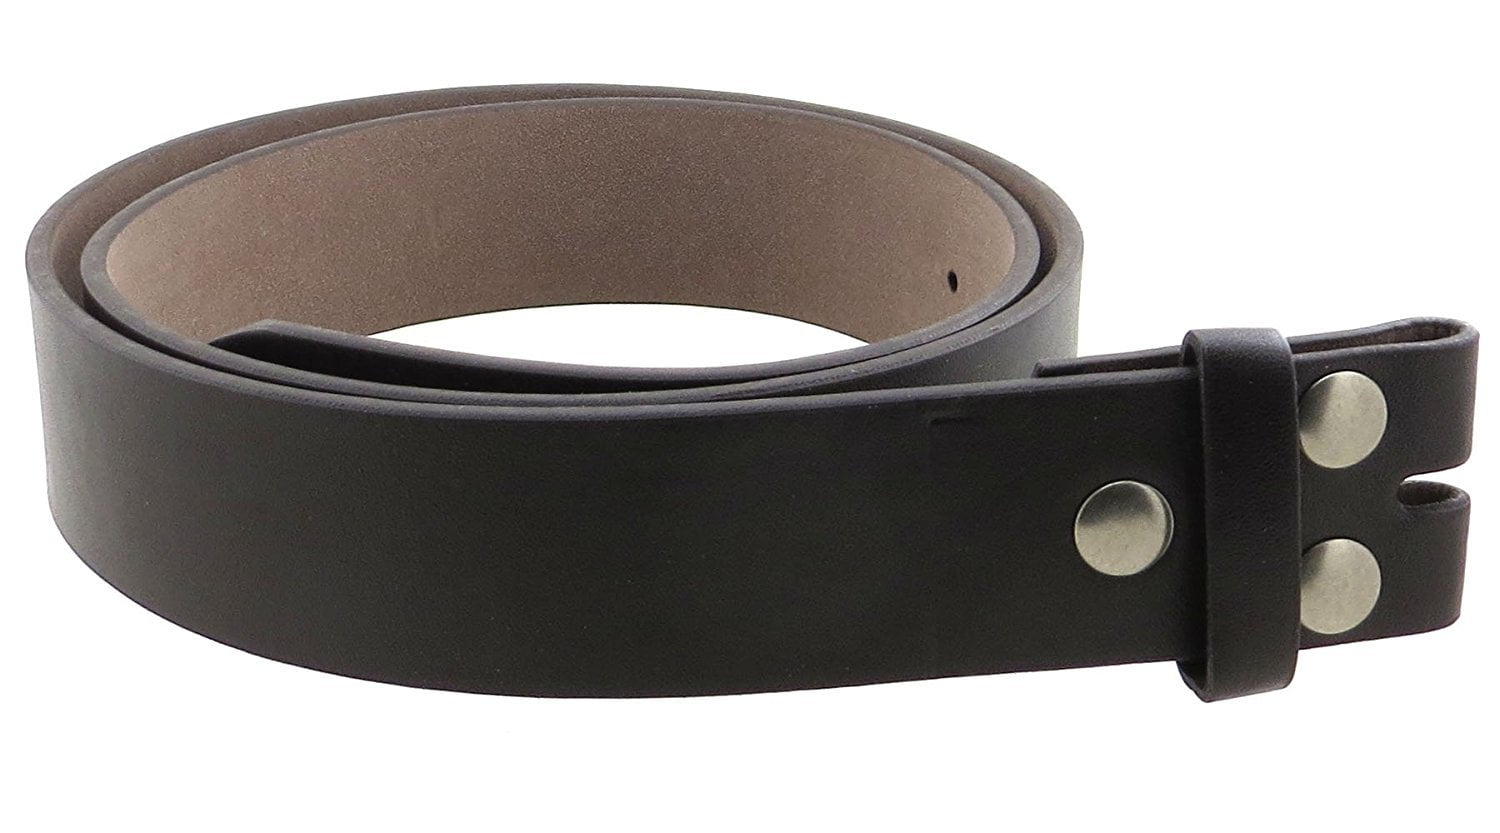 Snap on Genuine Leather Belt Strap Black & Brown Sizes 32" TO 44" 1.5" Wide Belt 